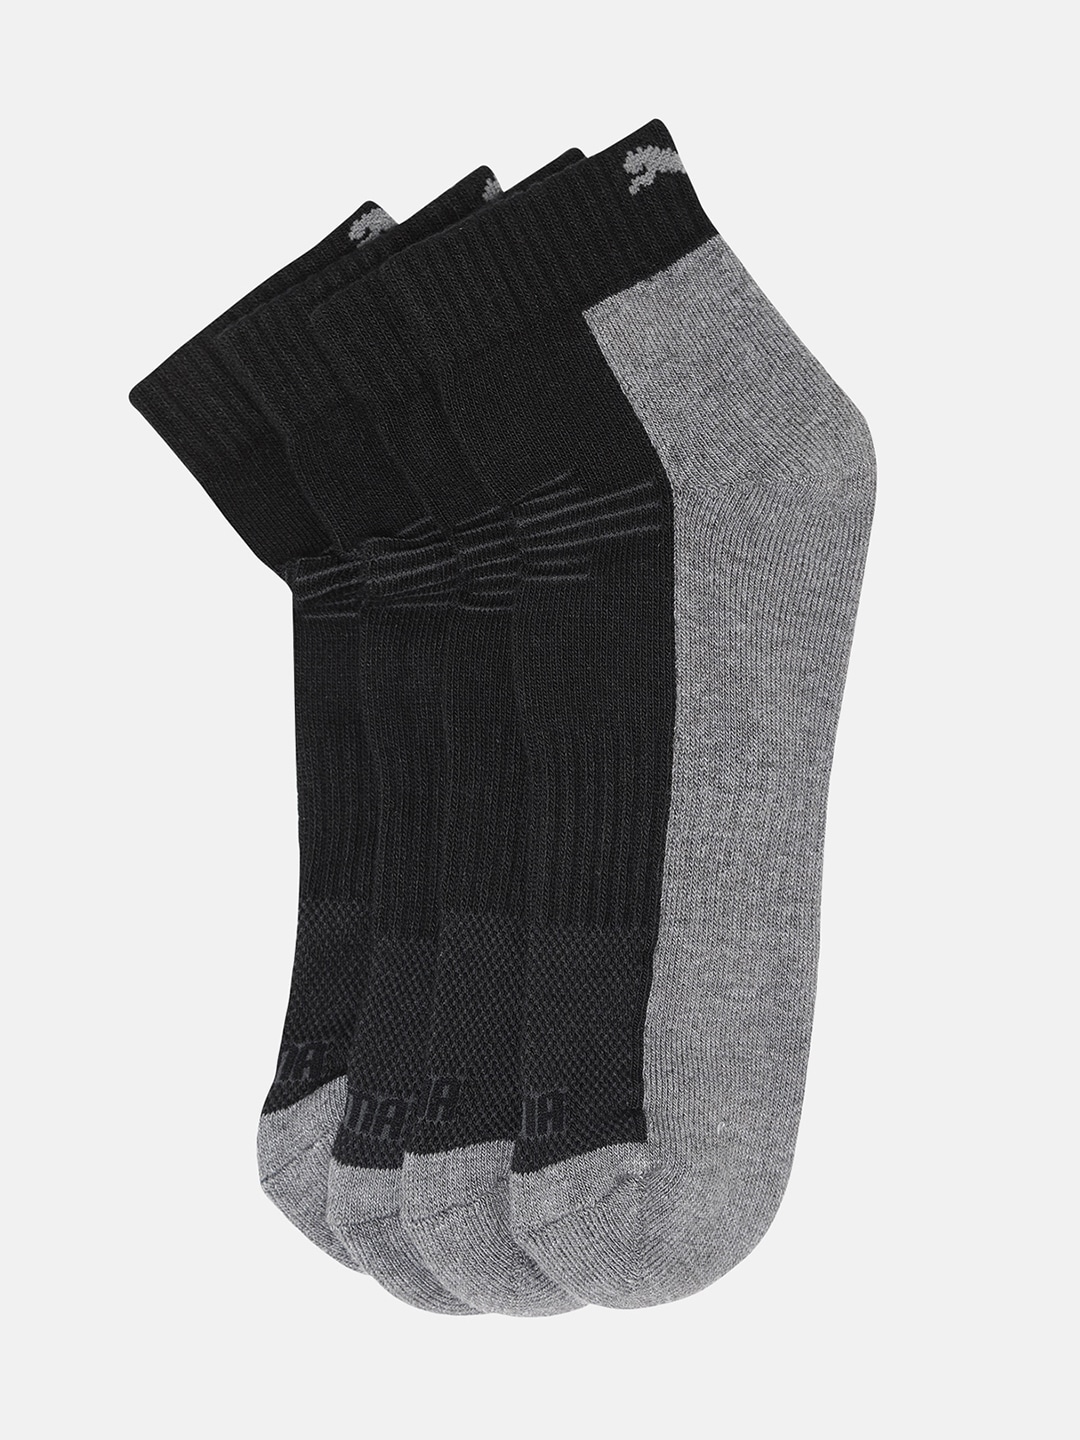 Accessories Socks | Puma Adults Black & Grey Pack of 2 Colourblocked Above Ankle Socks - GA20534